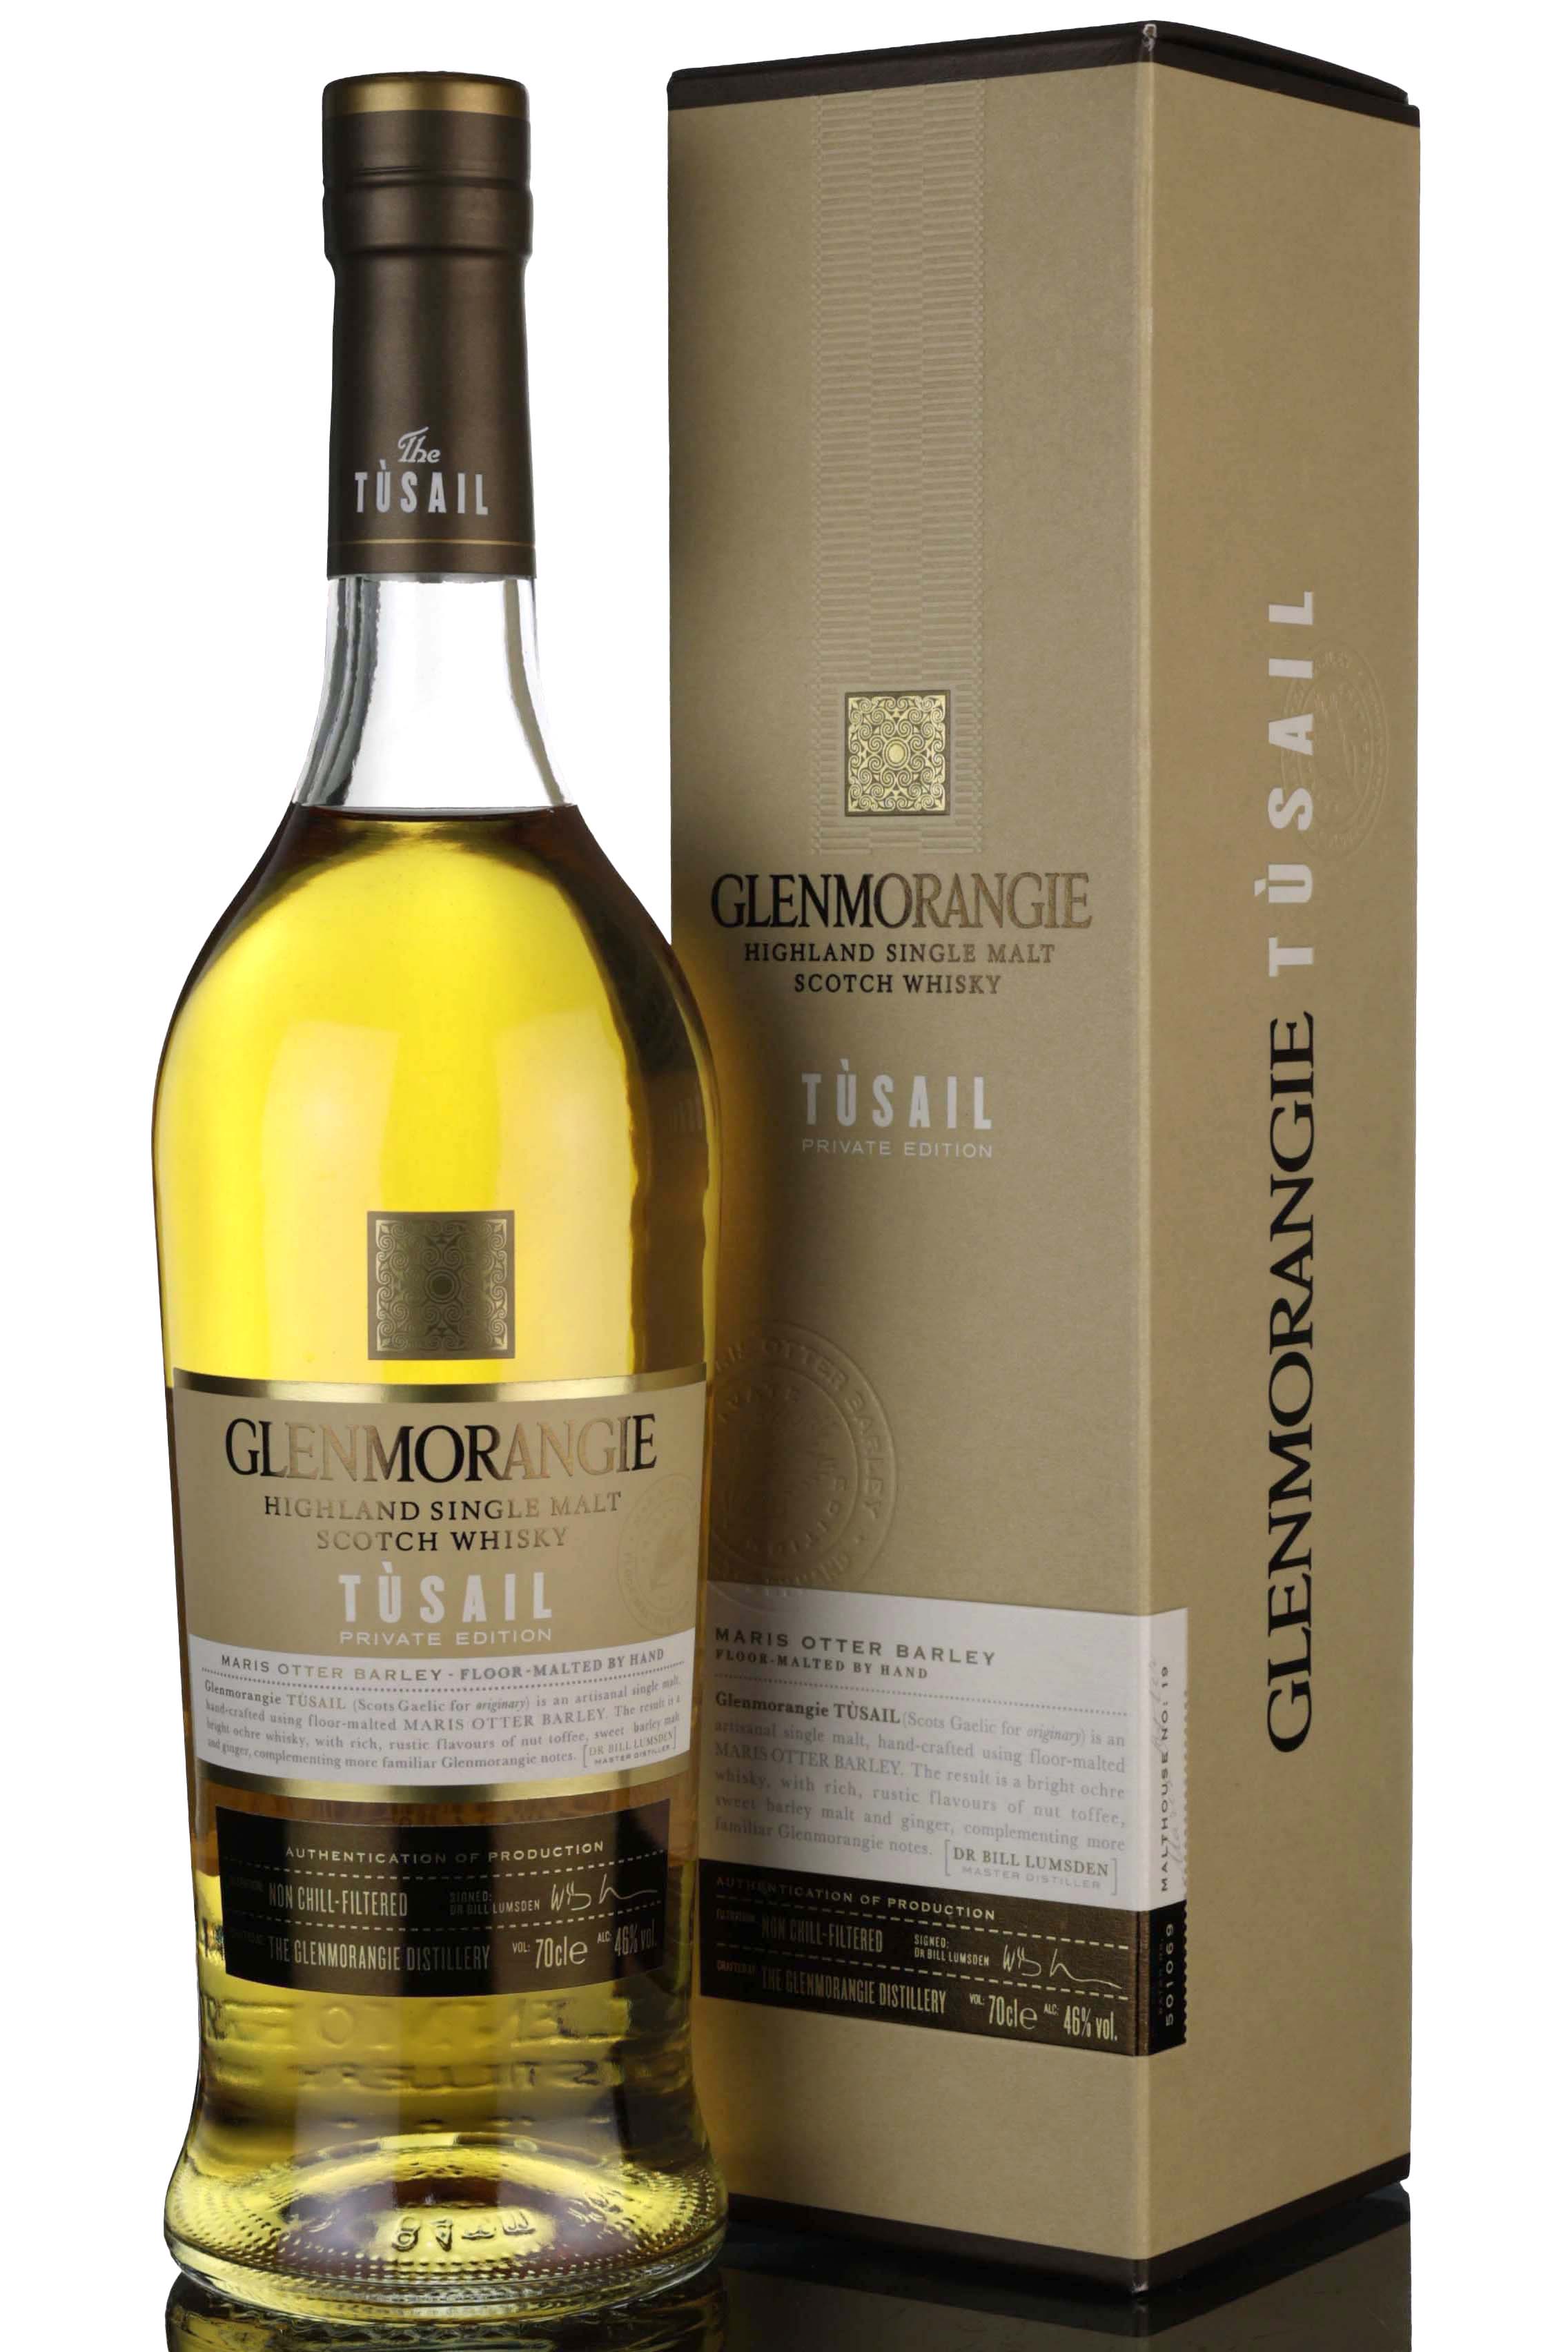 Glenmorangie Private Edition Tusail - 6th Release - 2014 Release